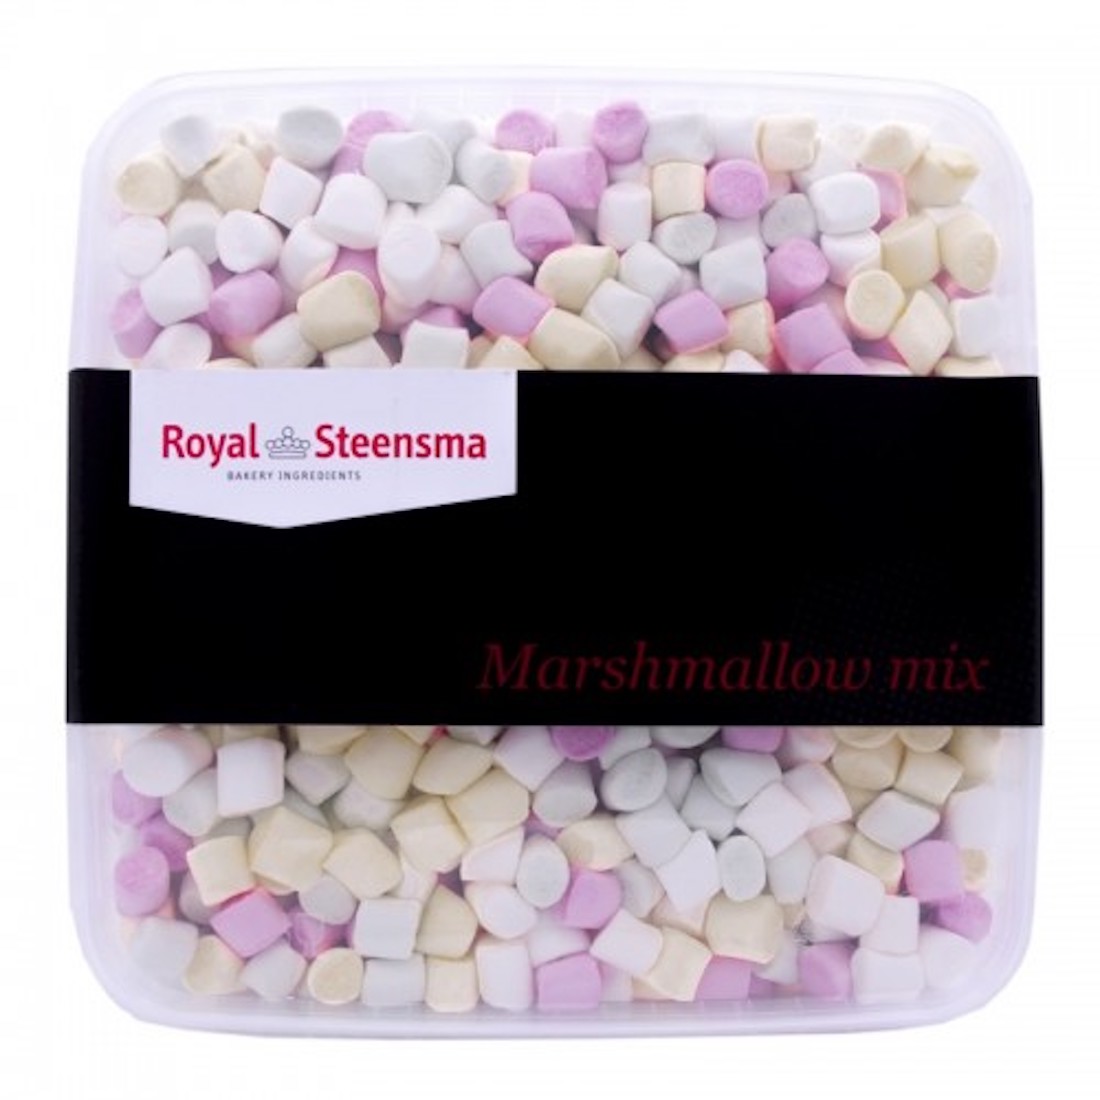 Mini marshmallows mix